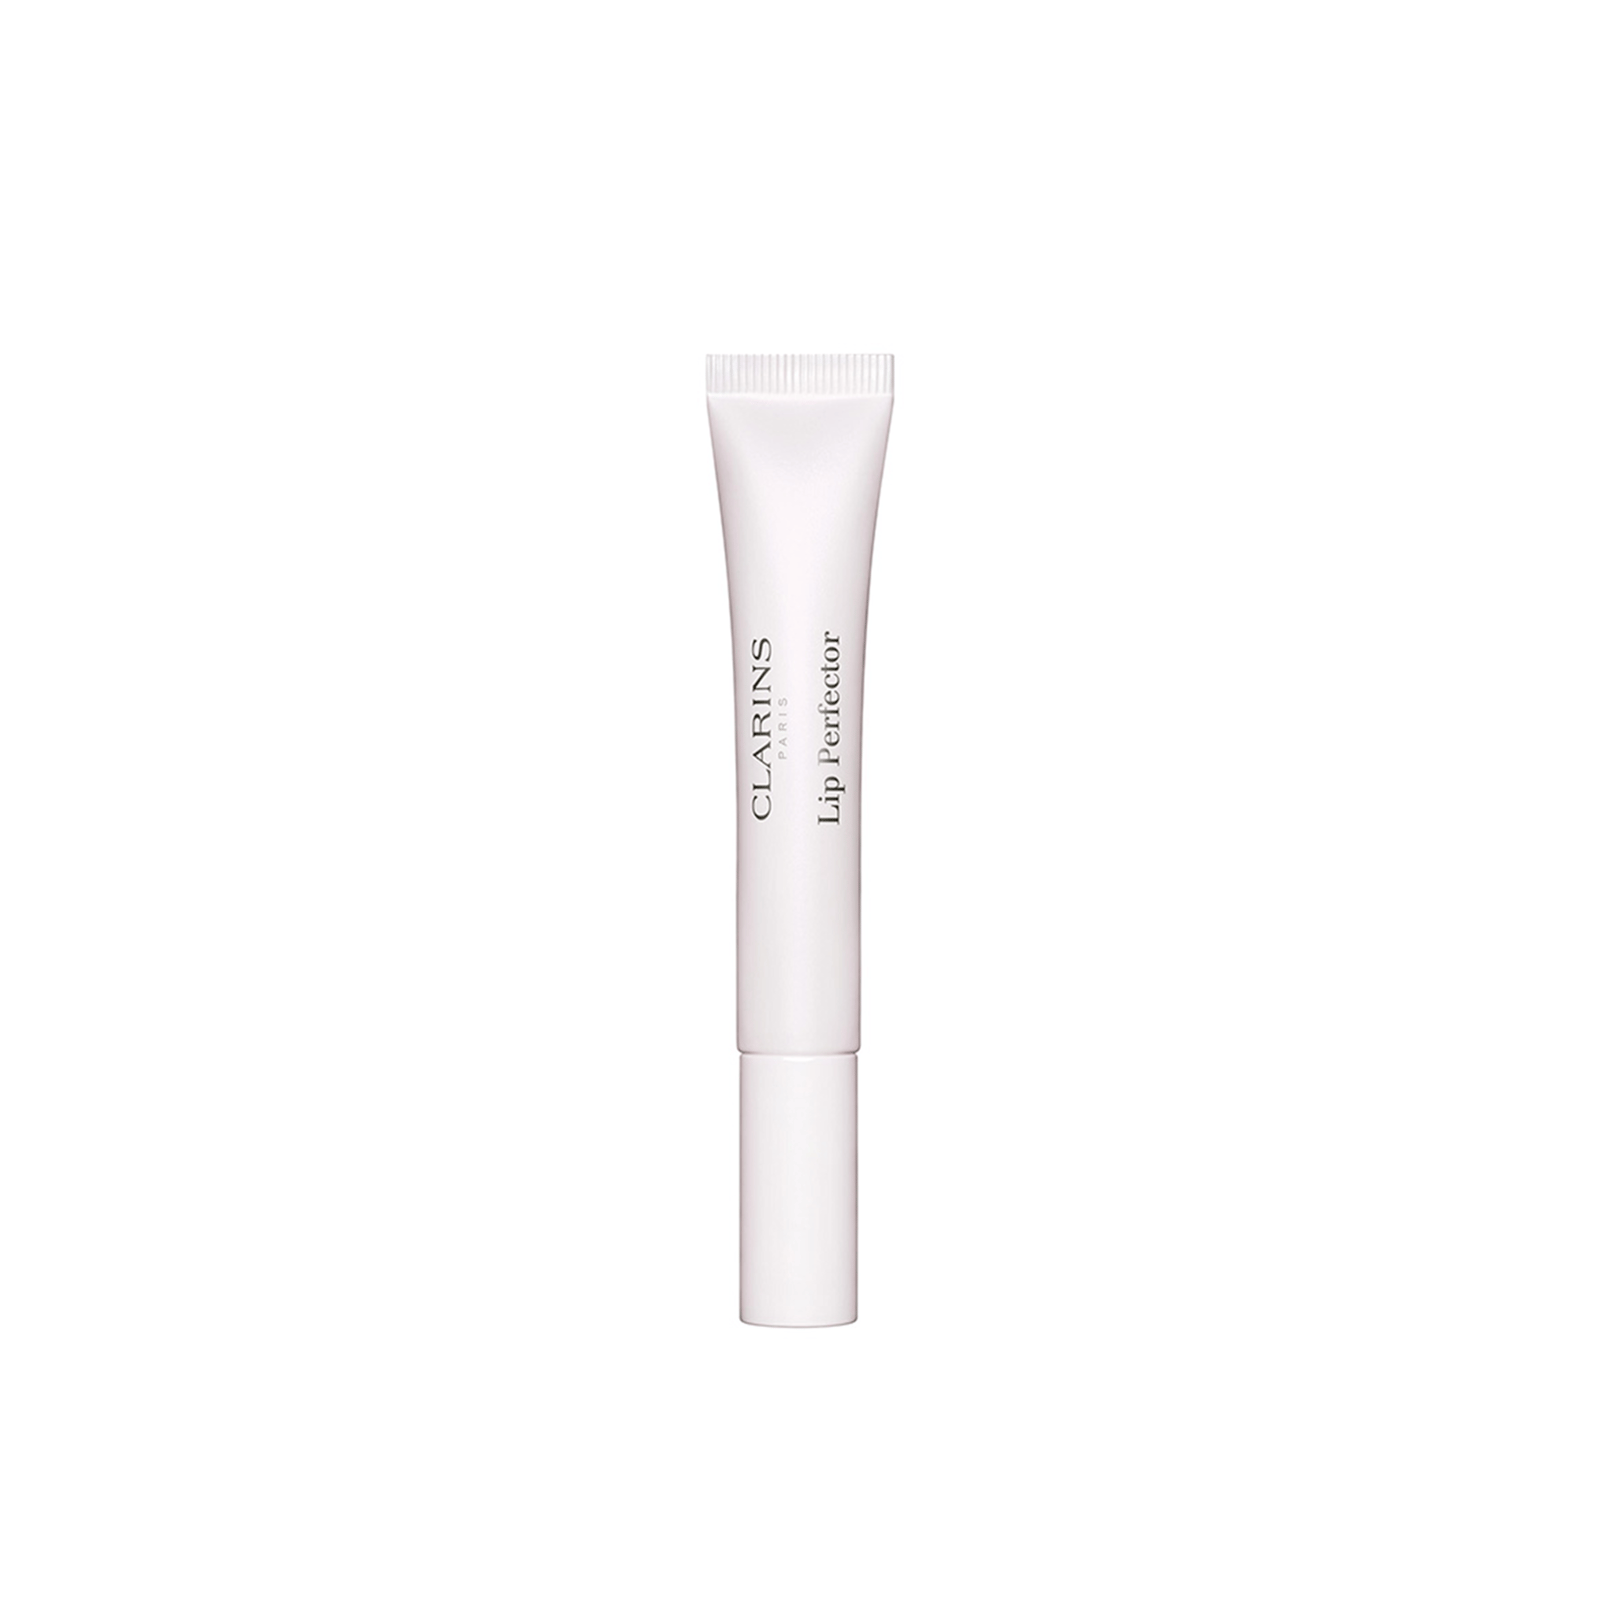 Clarins Lip Perfector 20 Translucent Glow 12ml (0.35 oz)